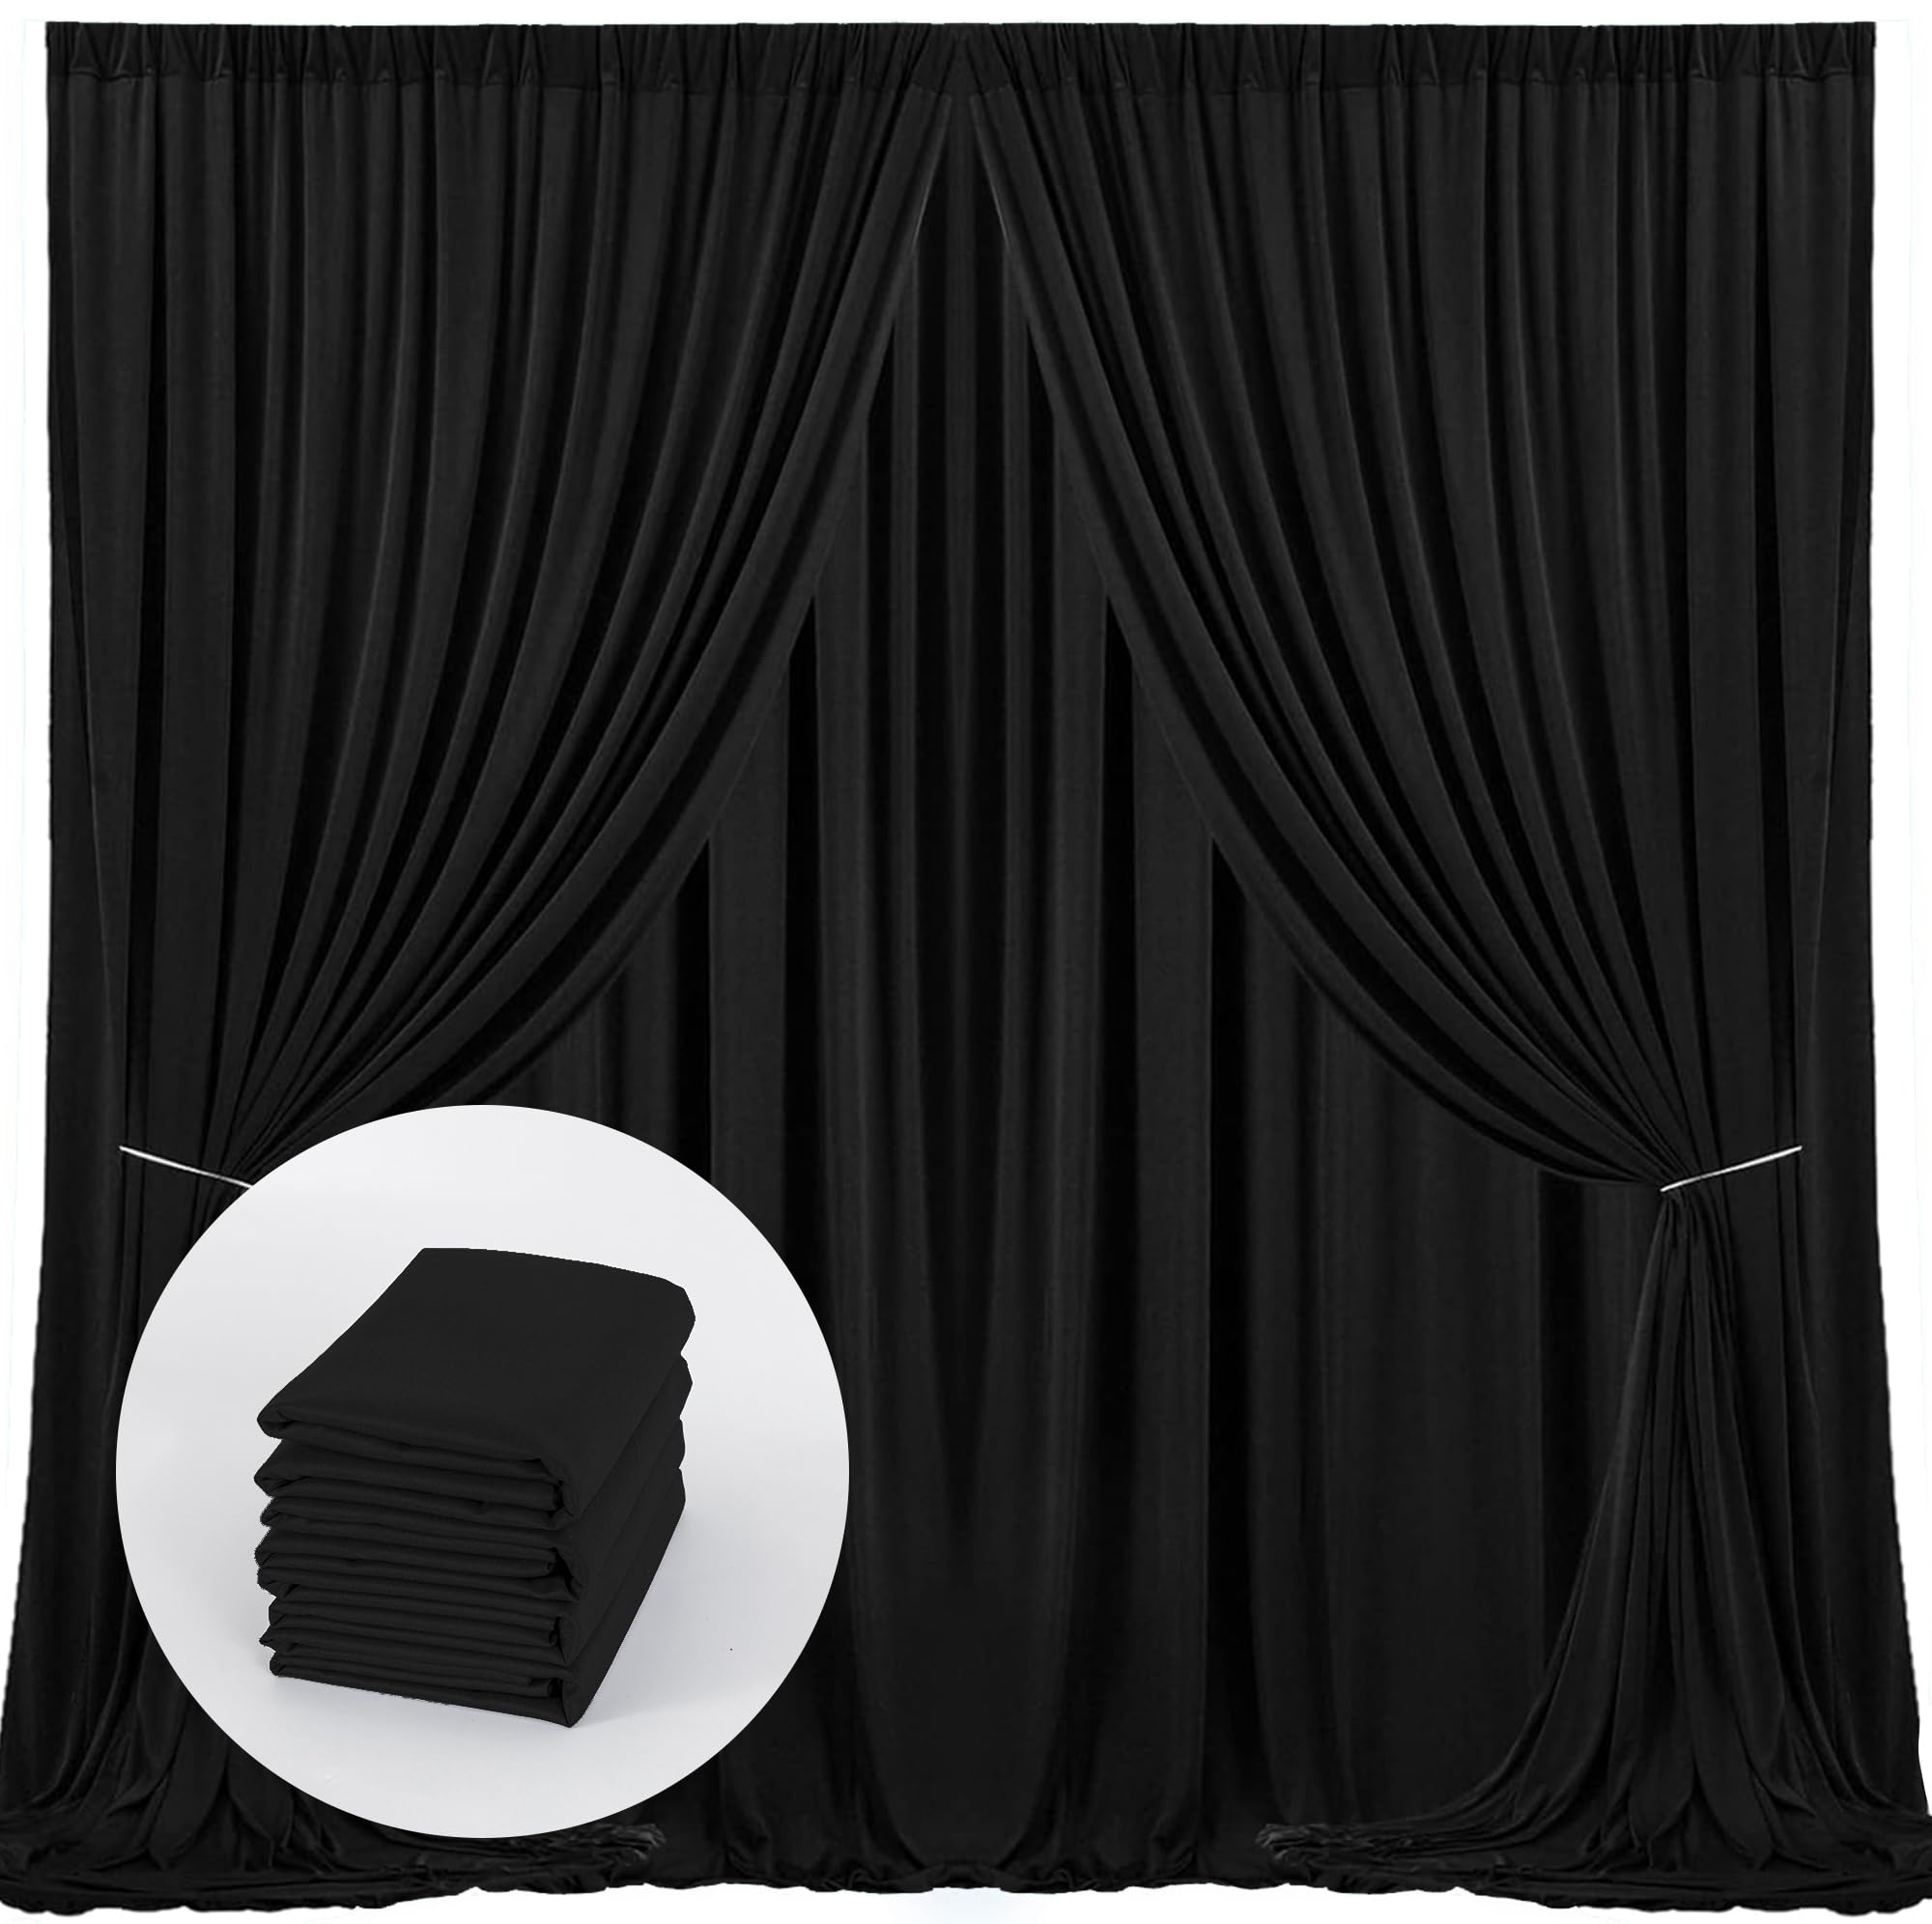 Black Backdrop Curtain for Party Wedding Ceremony 4 Panels Black Photo Curtains Backdrop Drapes Fabric Black Backdrop Curtain Rod Pocket Decoration Black Birthday Party for Boys Teens Men,5ft x 10ft